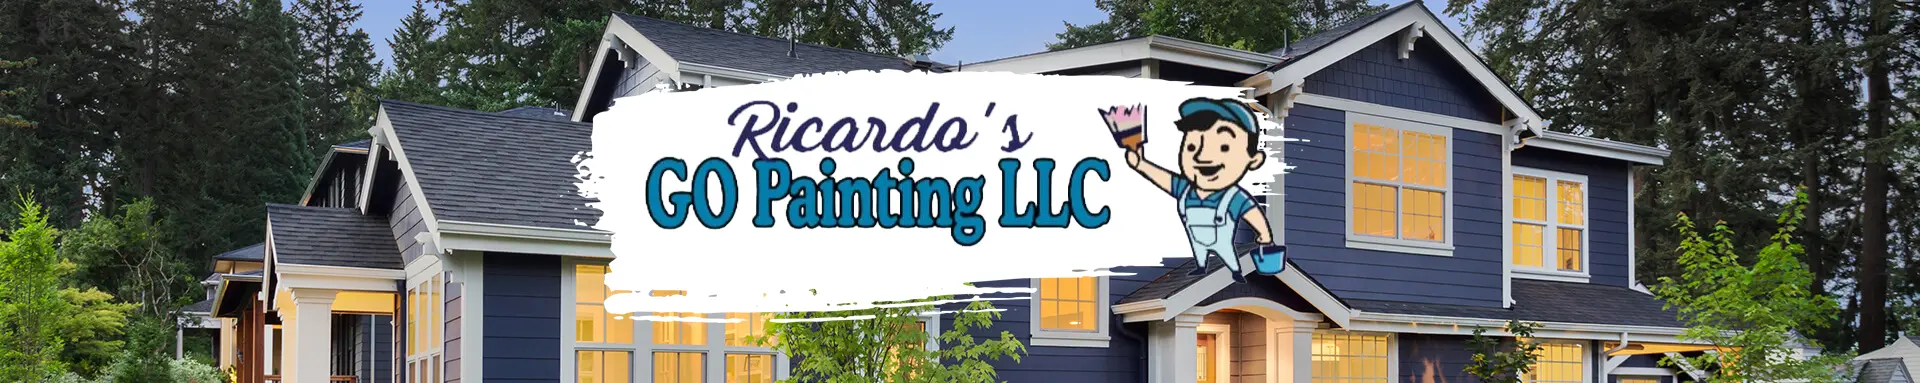 Ricardos go Painting LLC